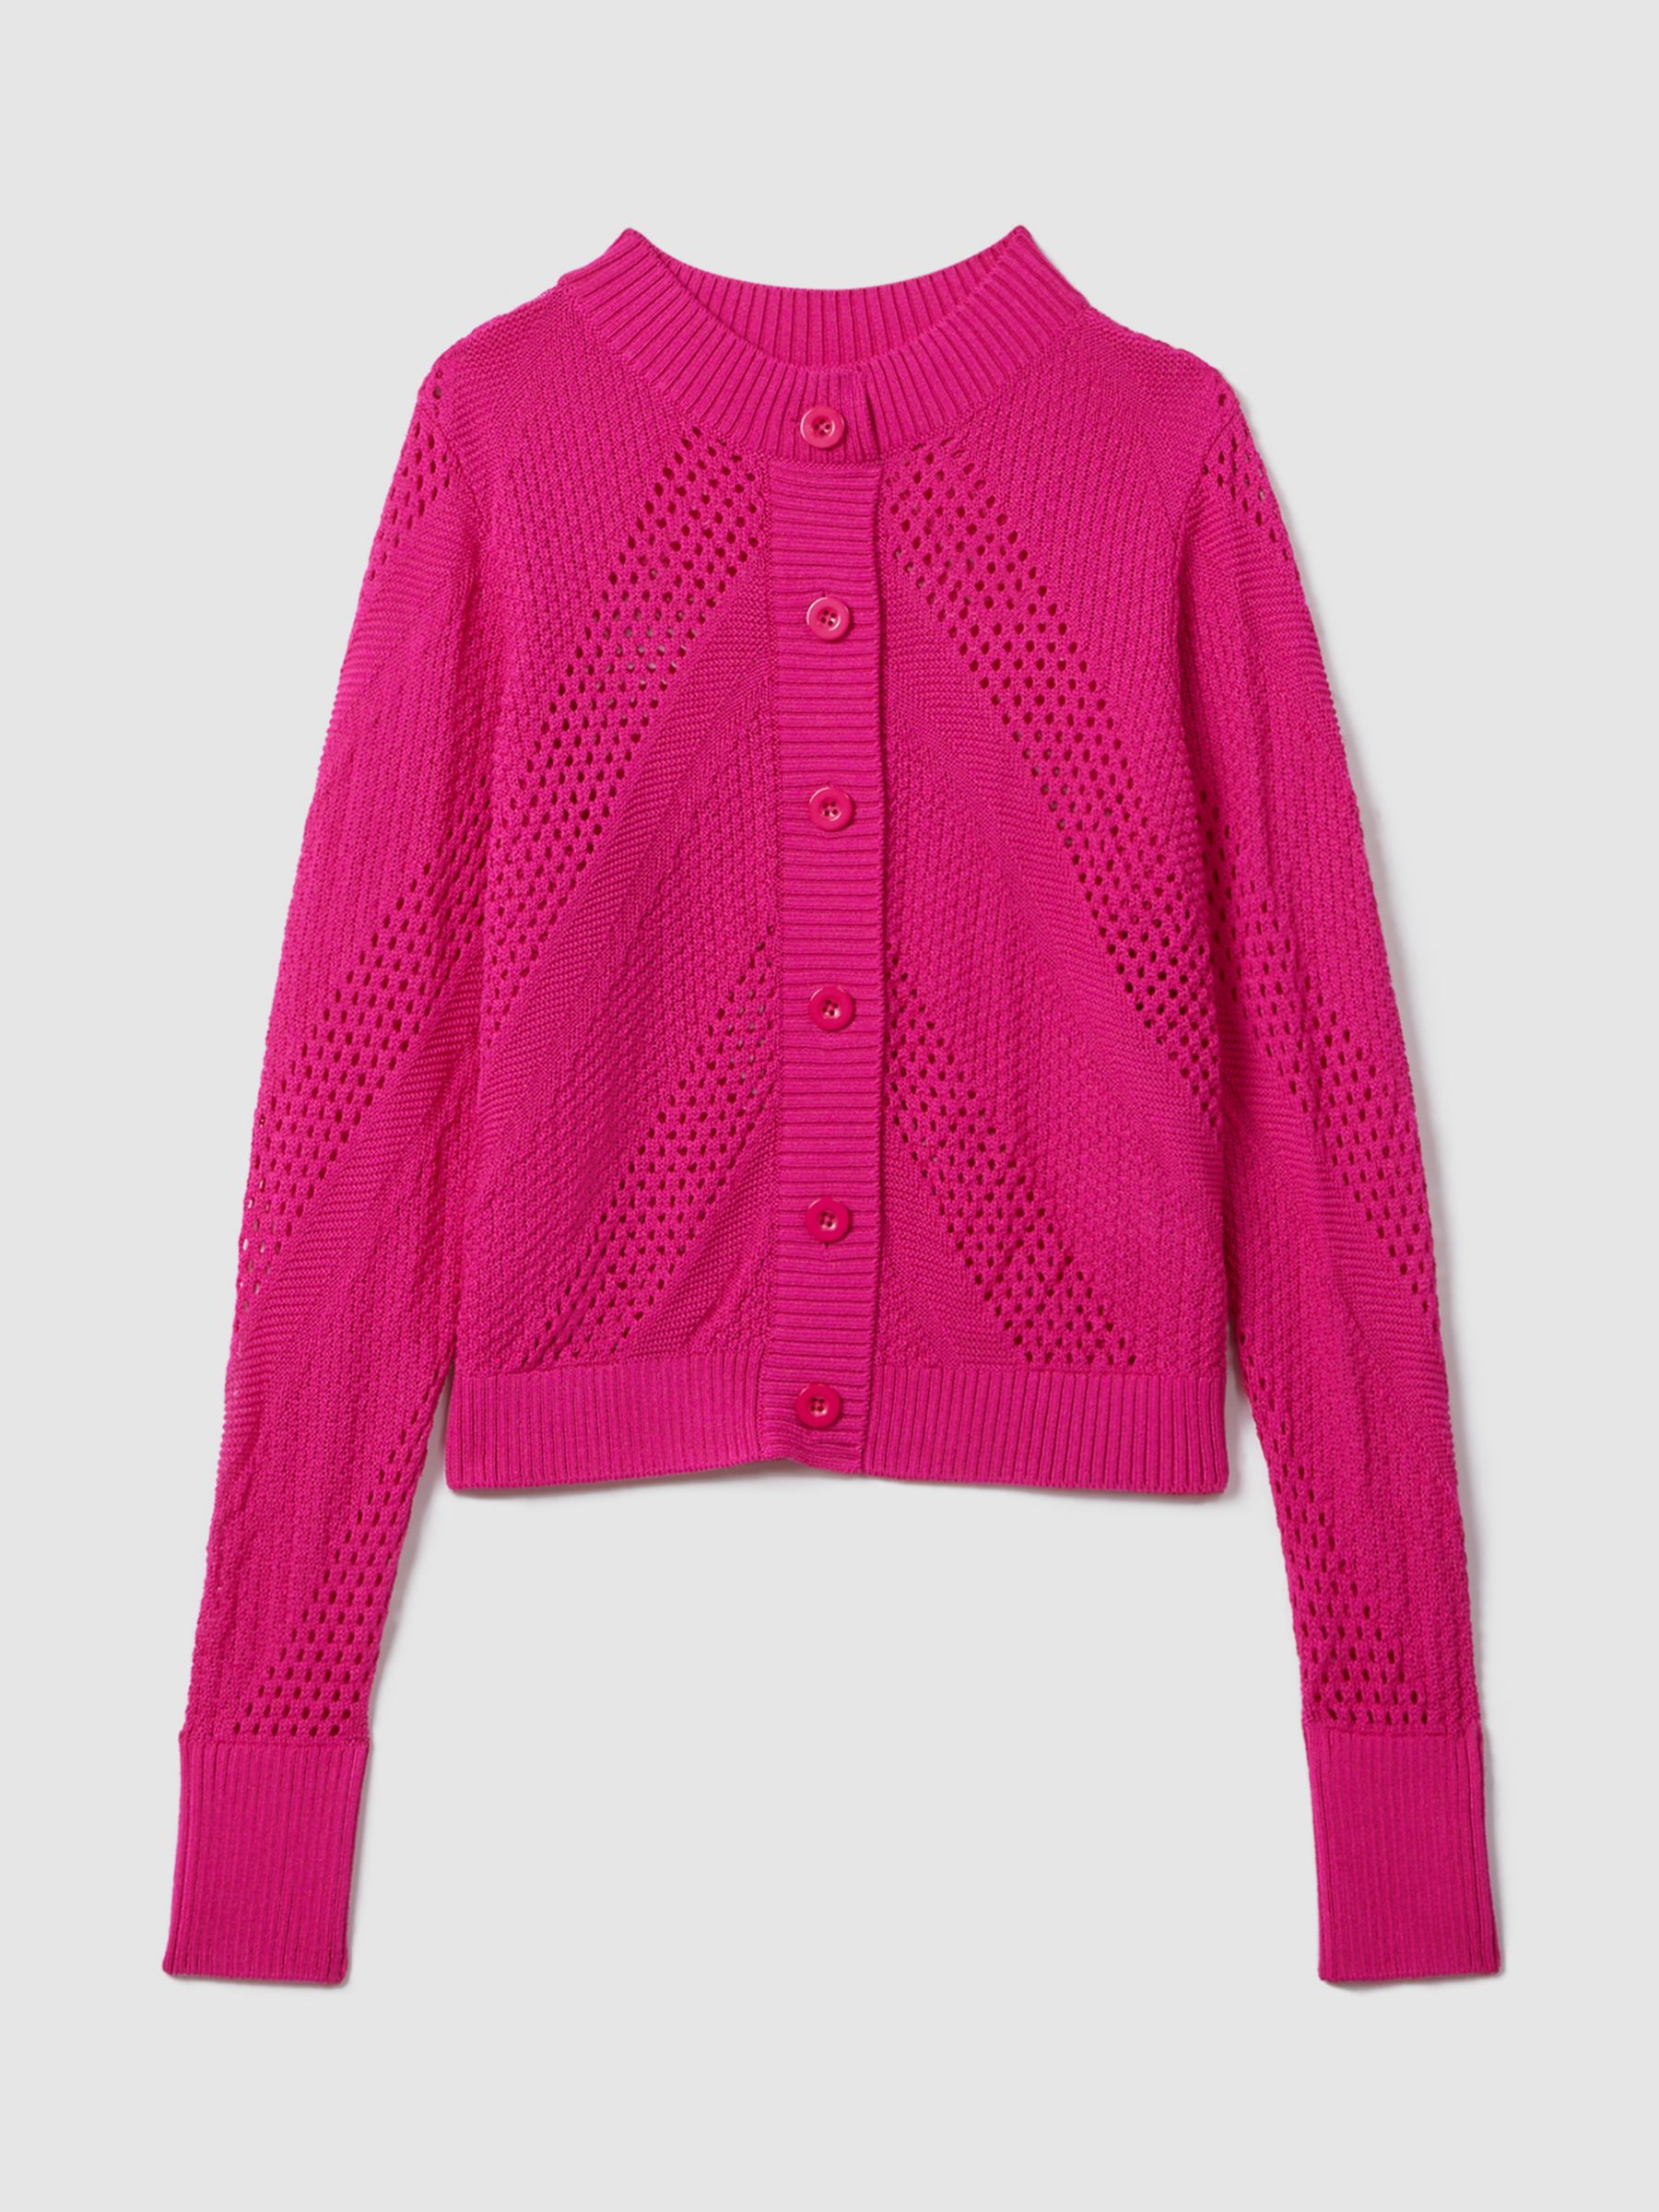 FLORERE Crochet Detail Cardigan, Bright Pink, 8